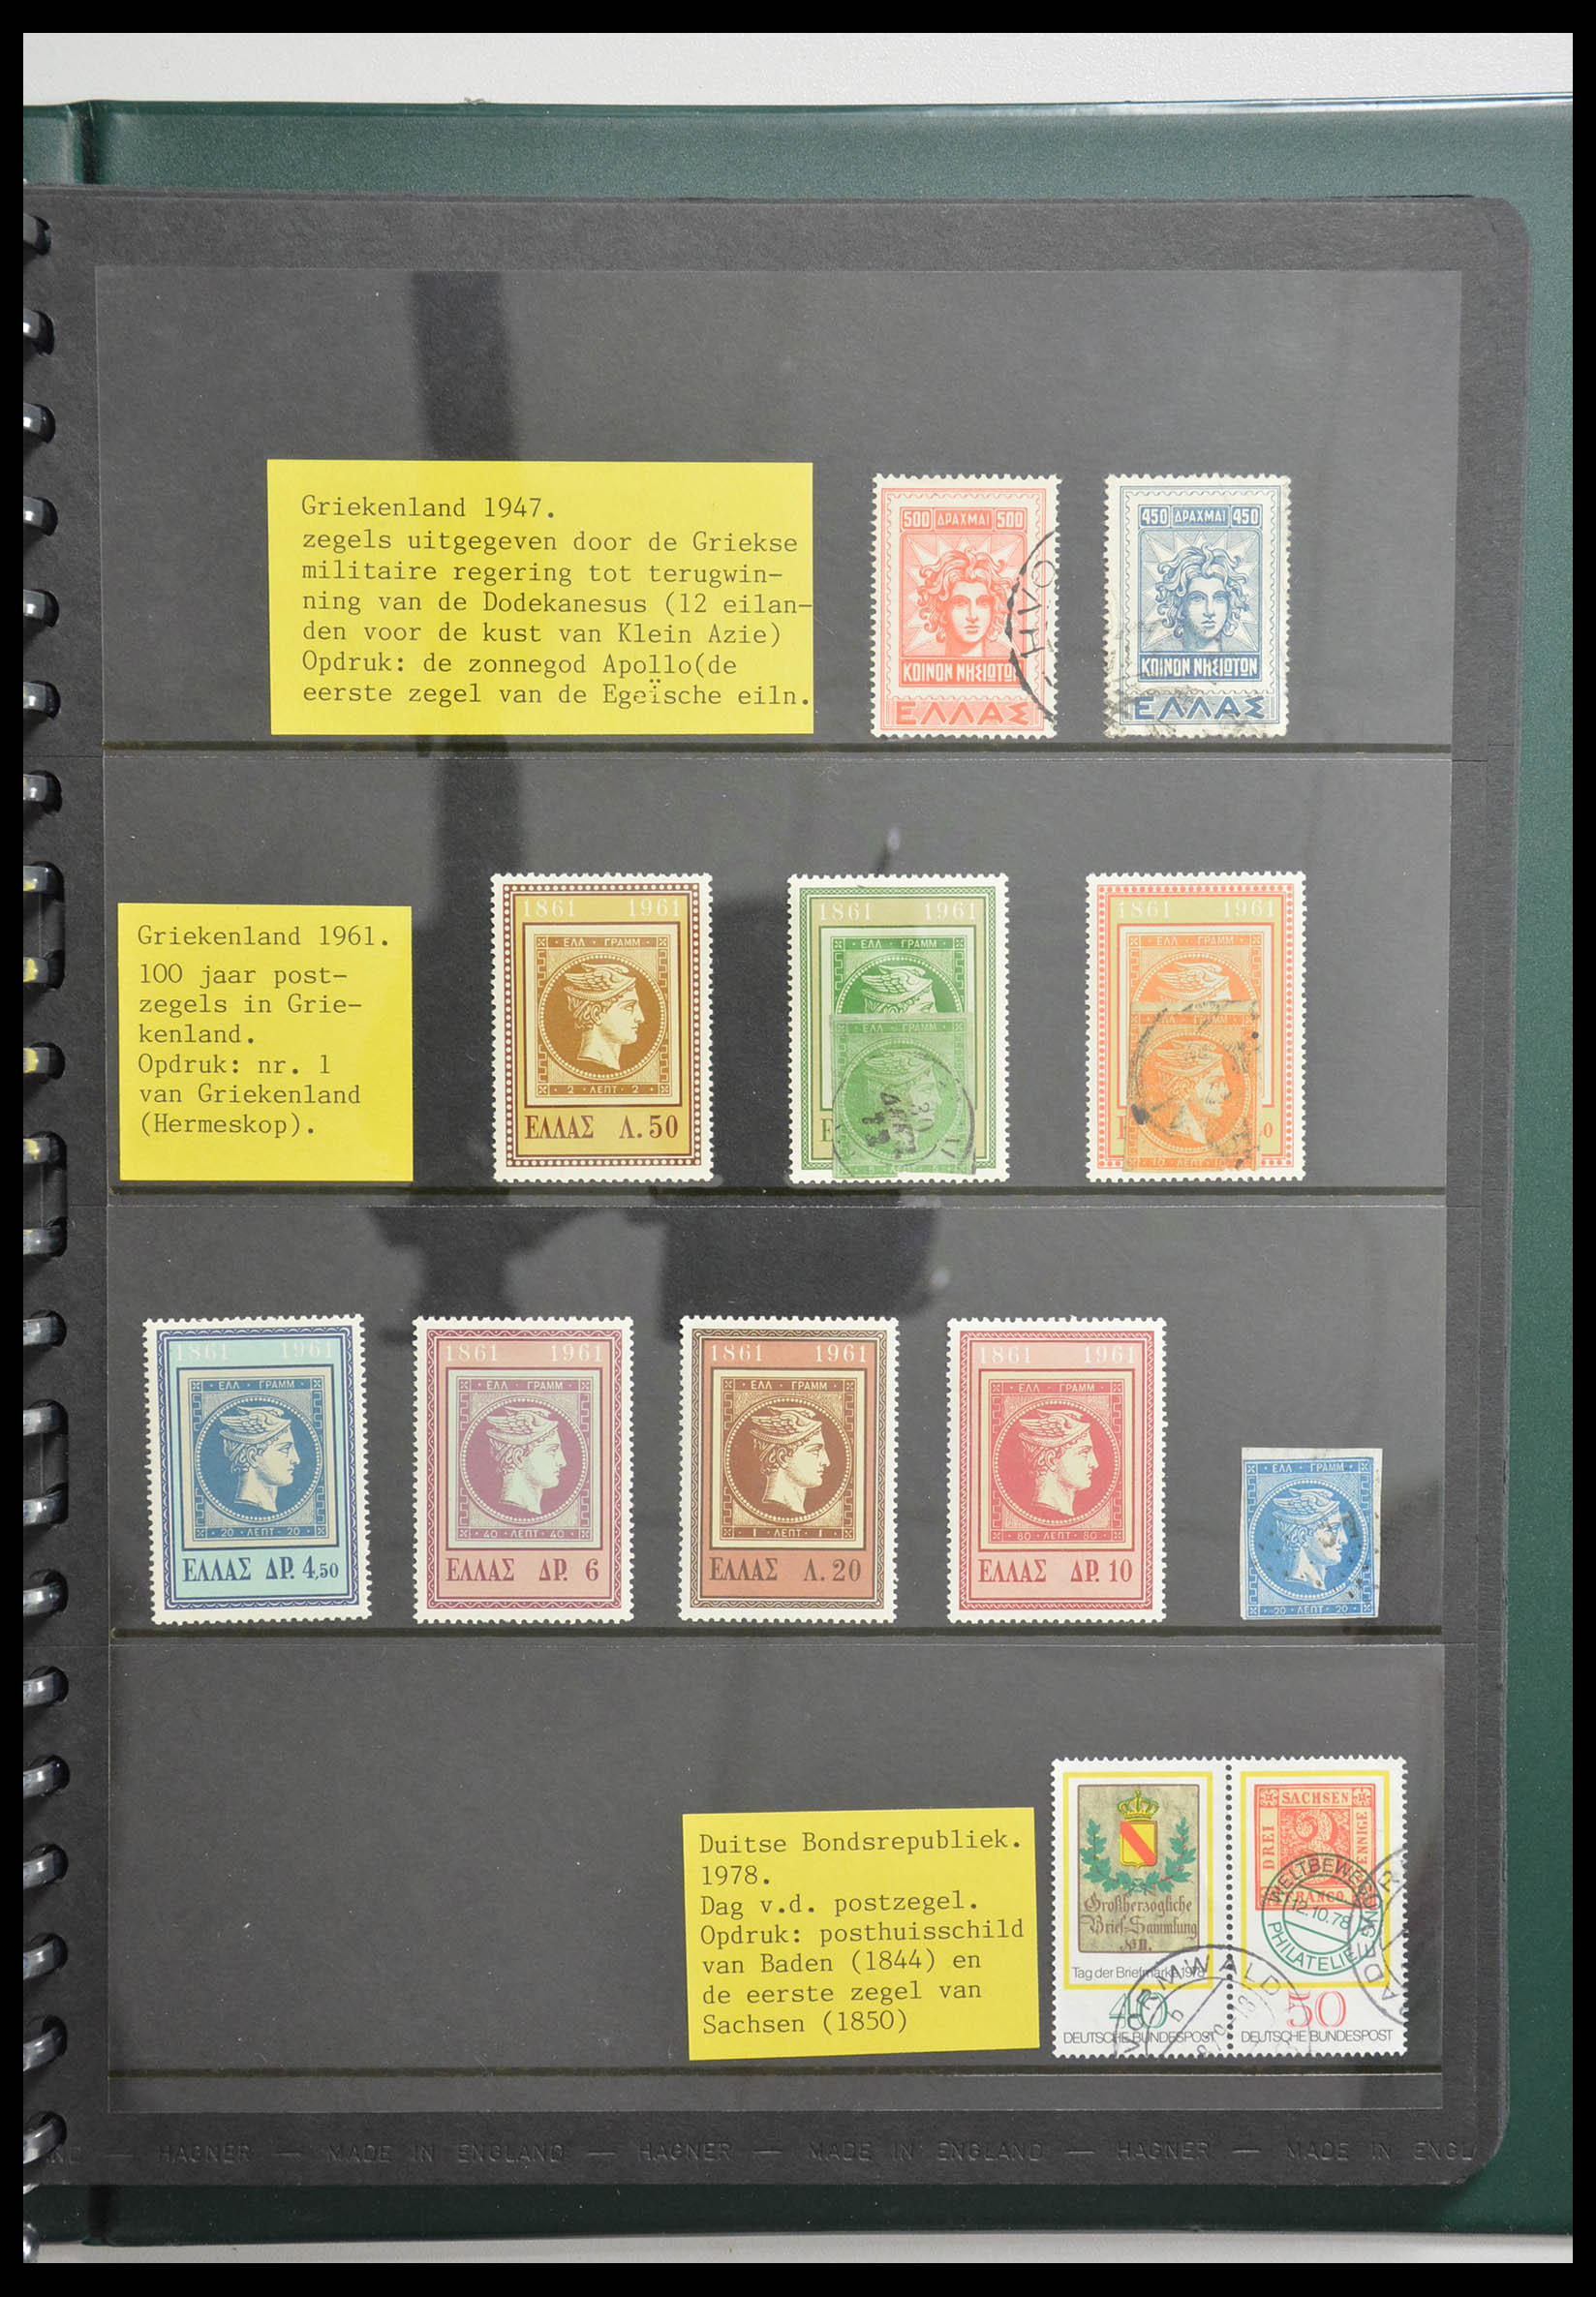 28337 121 - 28337 Postzegel op postzegel 1840-2001.